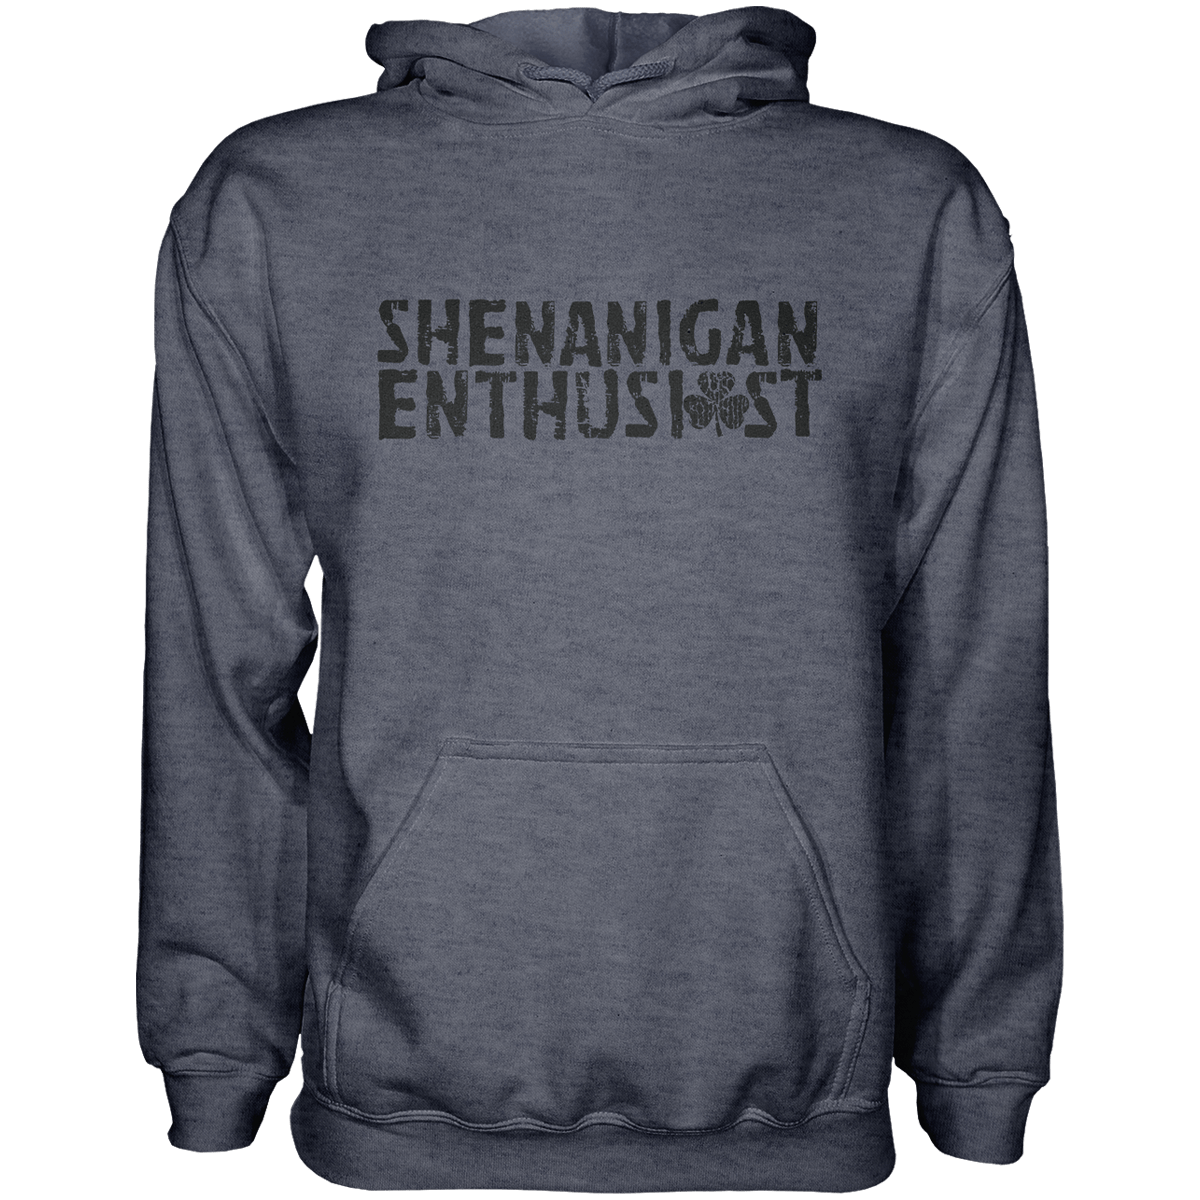 Shenanigan Enthusiest Hoodie - Greater Half